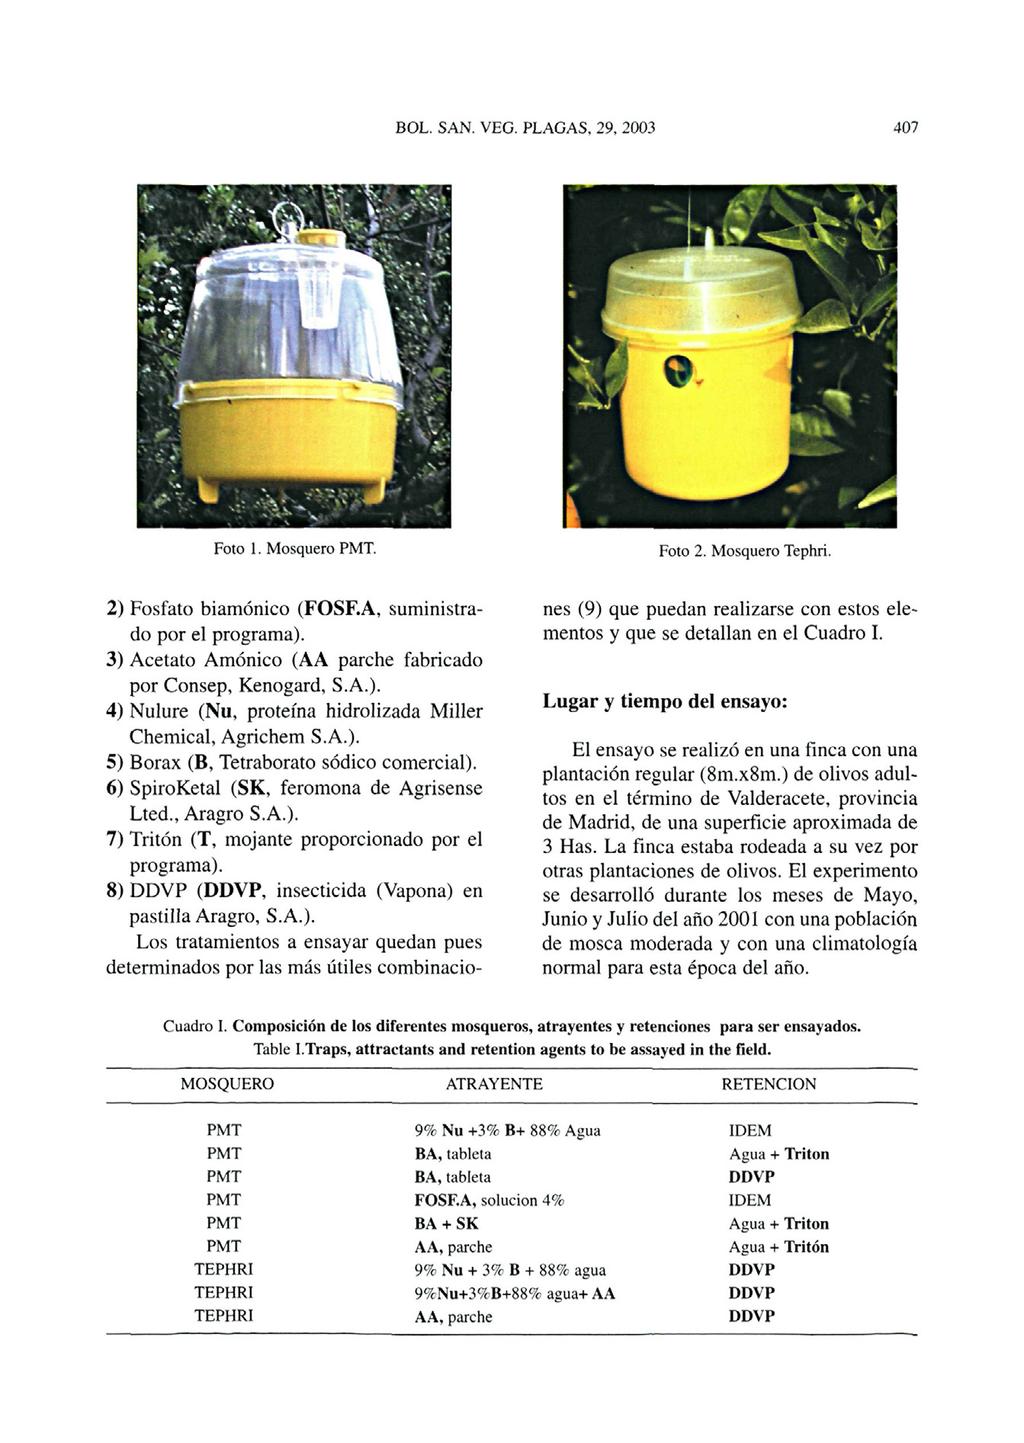 Foto 1. Mosquero. Foto 2. Mosquero Tephri. 2) Fosfato biamónico (FOSF.A, suministrado por el programa). 3) Acetato Amónico (AA parche fabricado por Consep, Kenogard, S.A.). 4) Nulure (Nu, proteína hidrolizada Miller Chemical, Agrichem S.